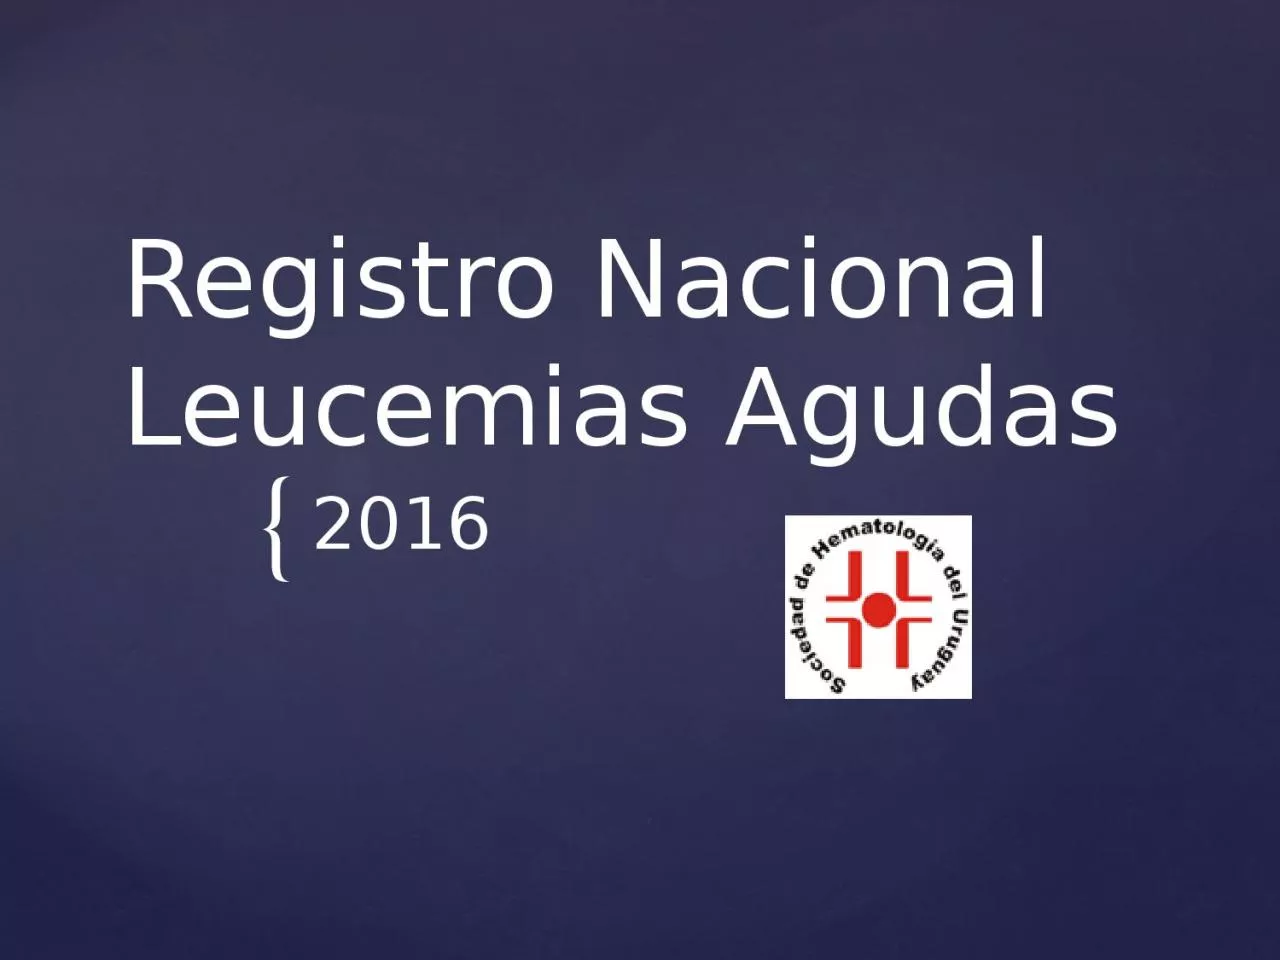 Registro Nacional Leucemias Agudas